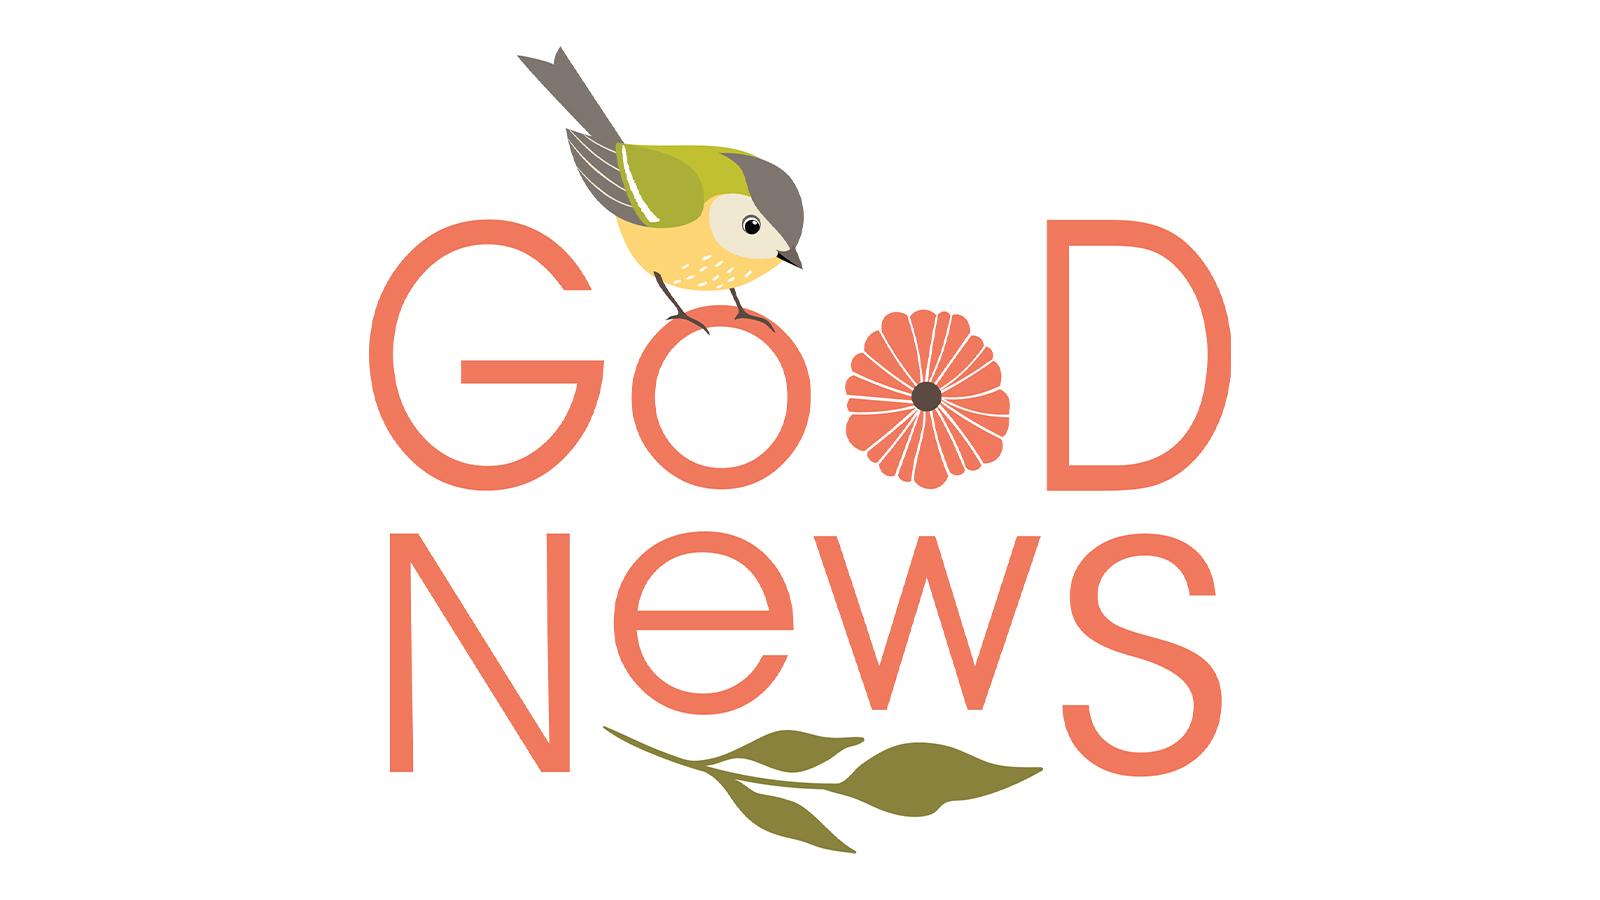 good news logo